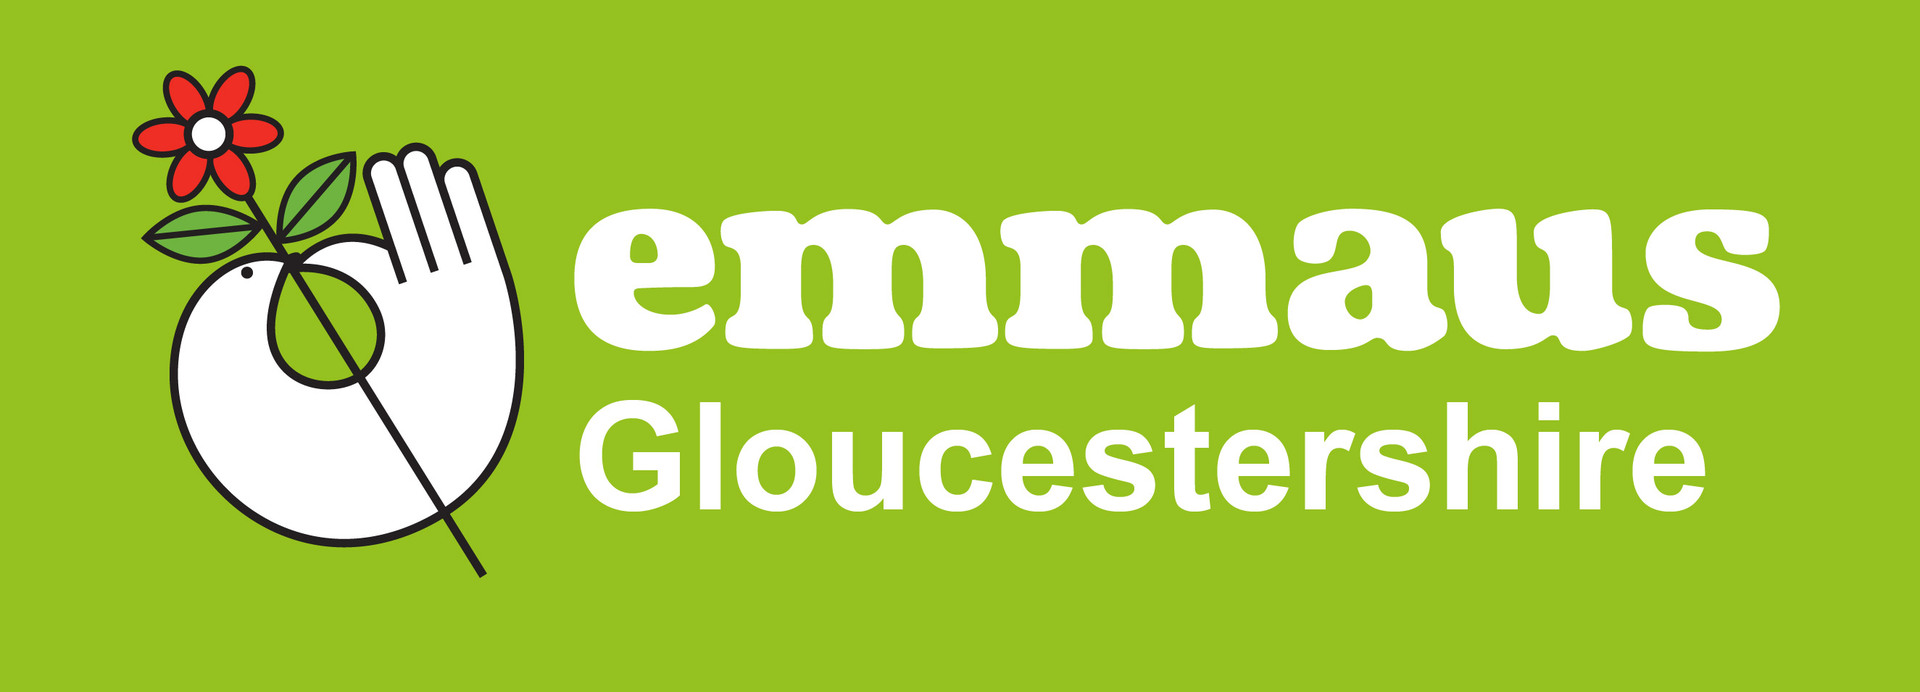 Emmaus Gloucestershire logo